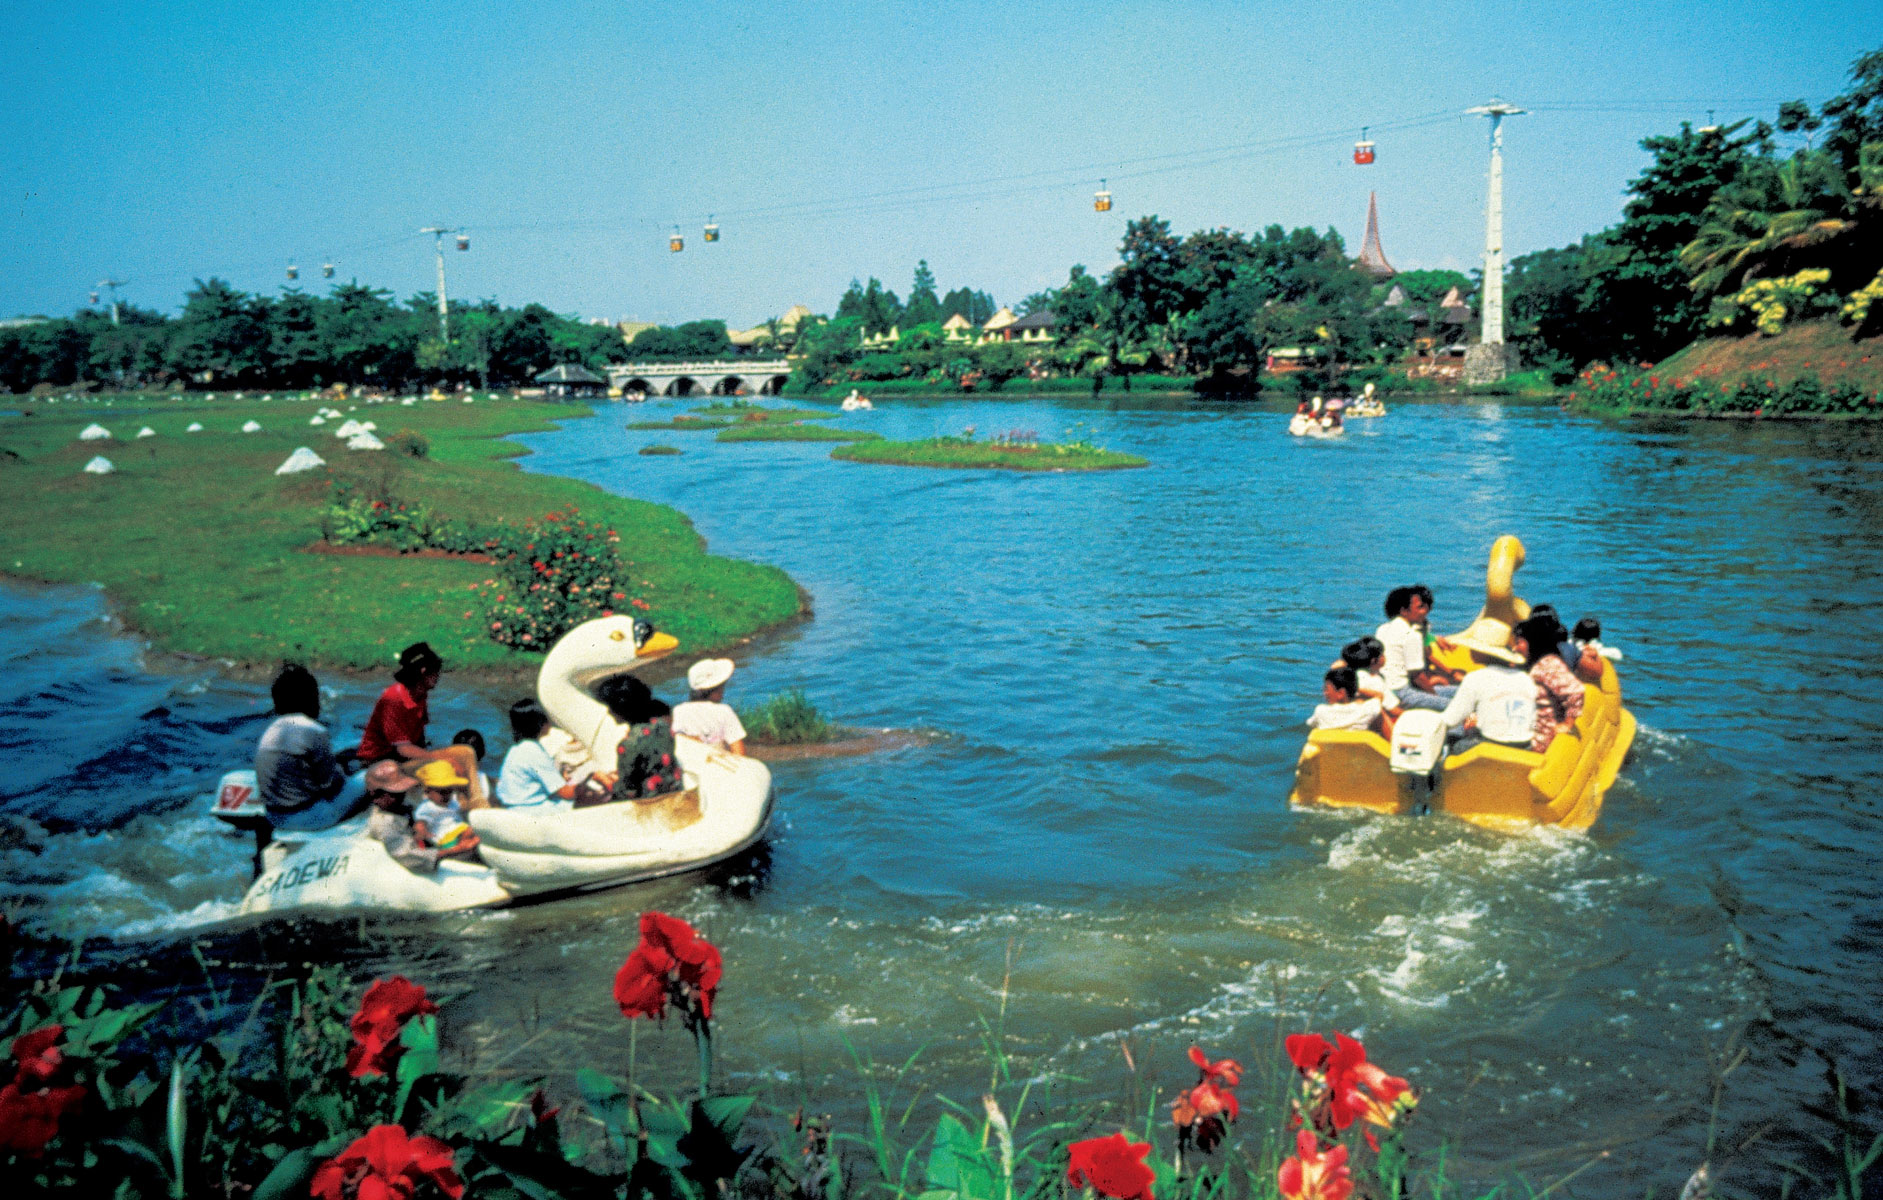 A photograph of park visitors riding in swan-shaped motorboats at Taman Mini.